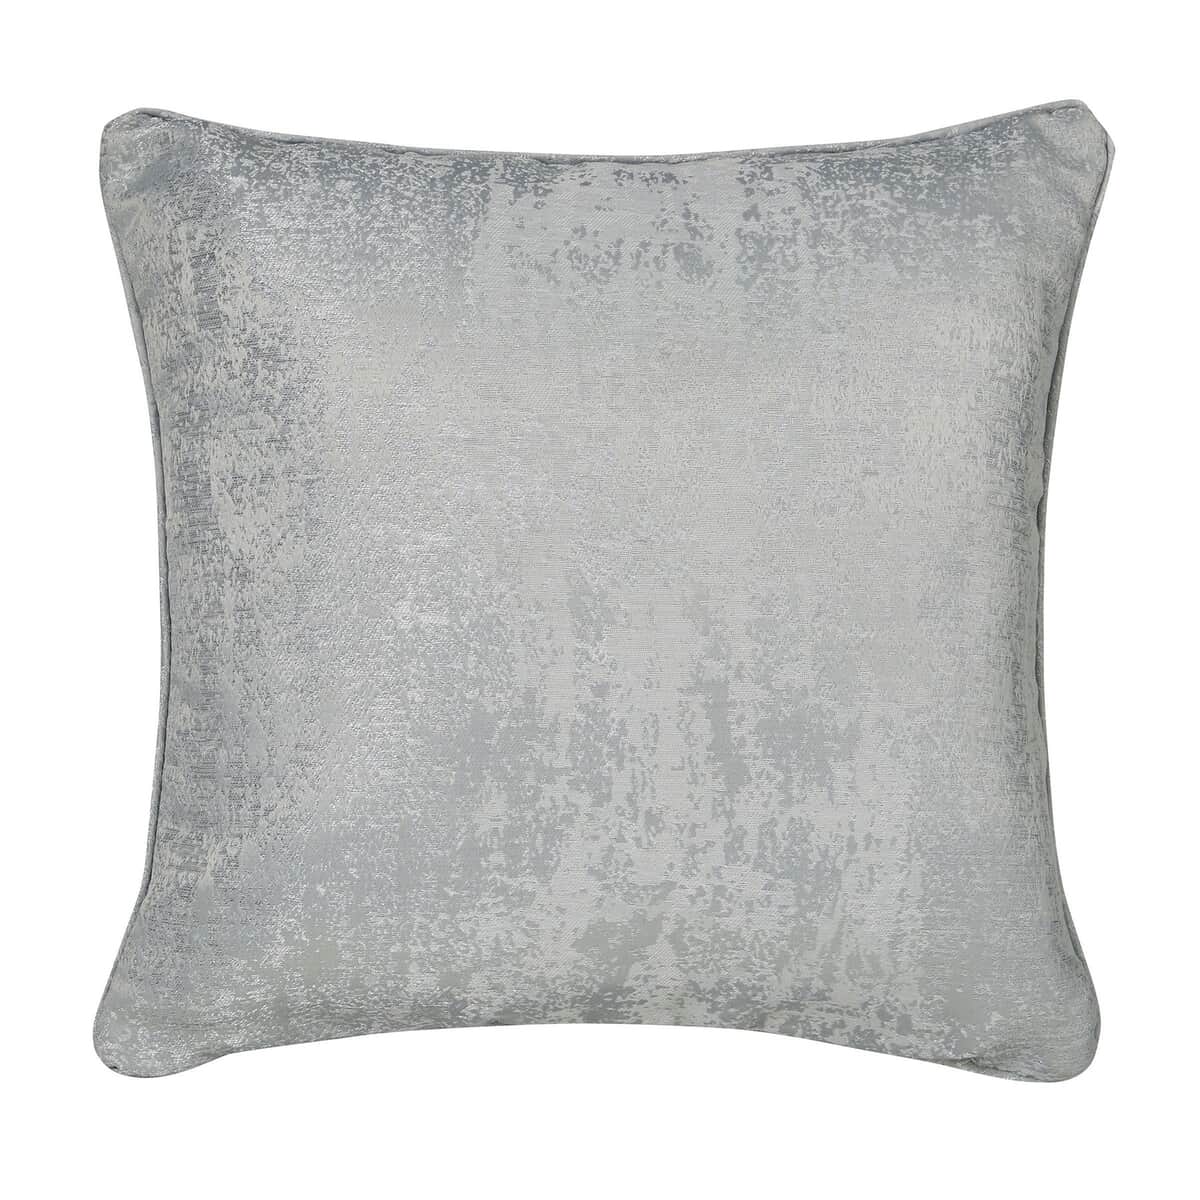 Helena Springfield Roma Cushion Silver large